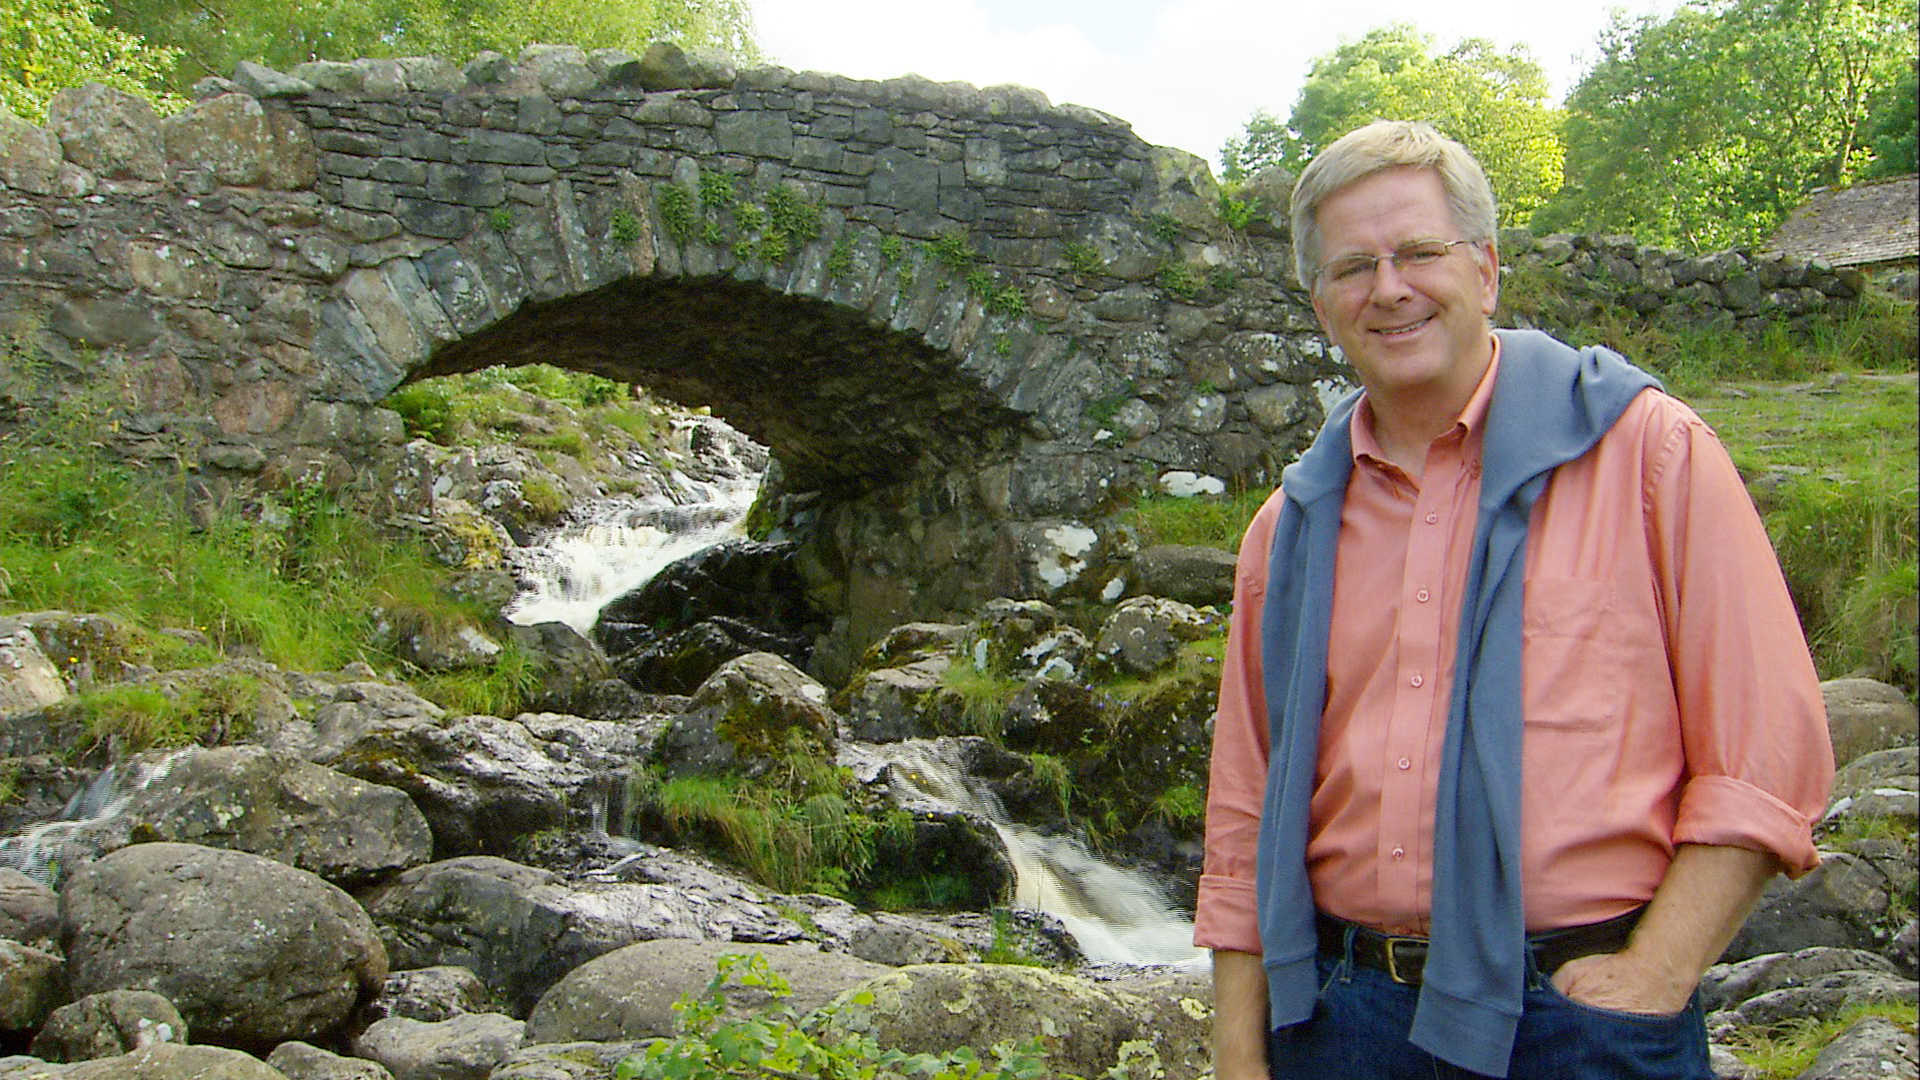 North England: Rick Steves at the Packhorse Bridge